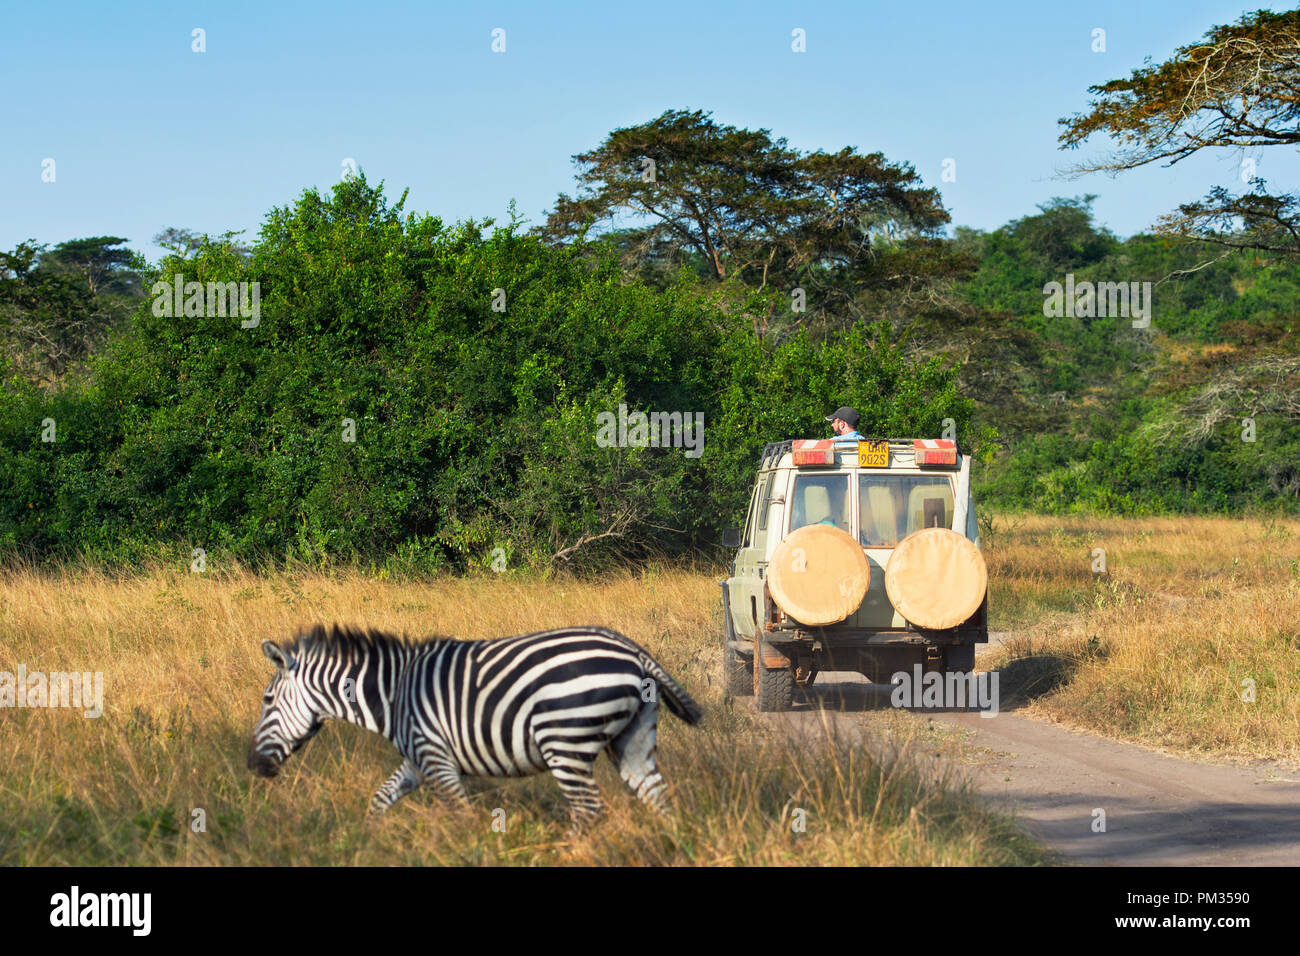 Safari Vehicle with Tourist on a Game Drive, Zebra running past and 4X4 Safari Vehicle Stock Photo